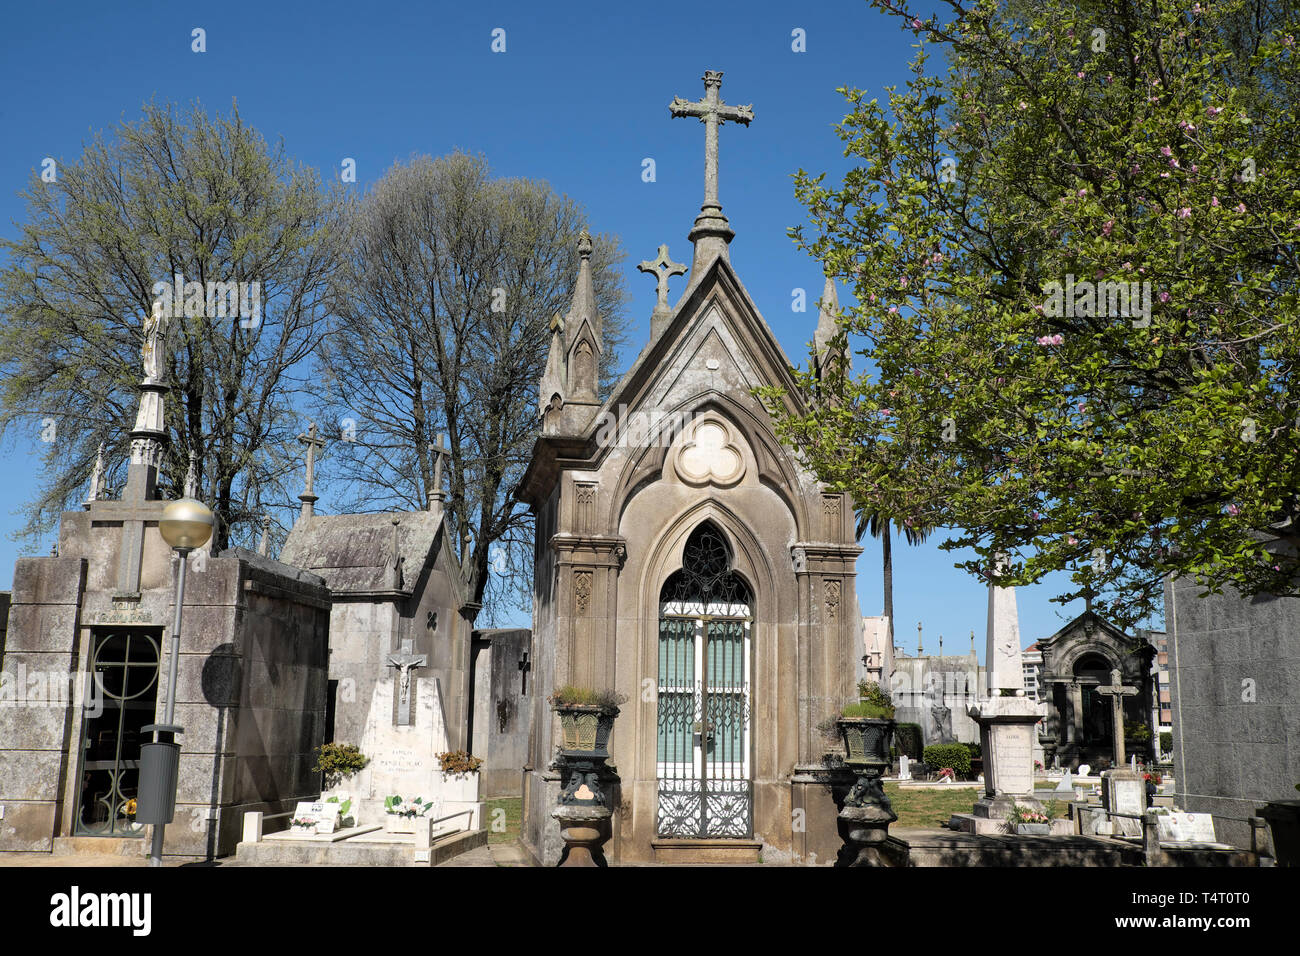 Agramonte Cemetery mausoleums in Boavista district of Porto Portugal Europe EU  KATHY DEWITT Stock Photo